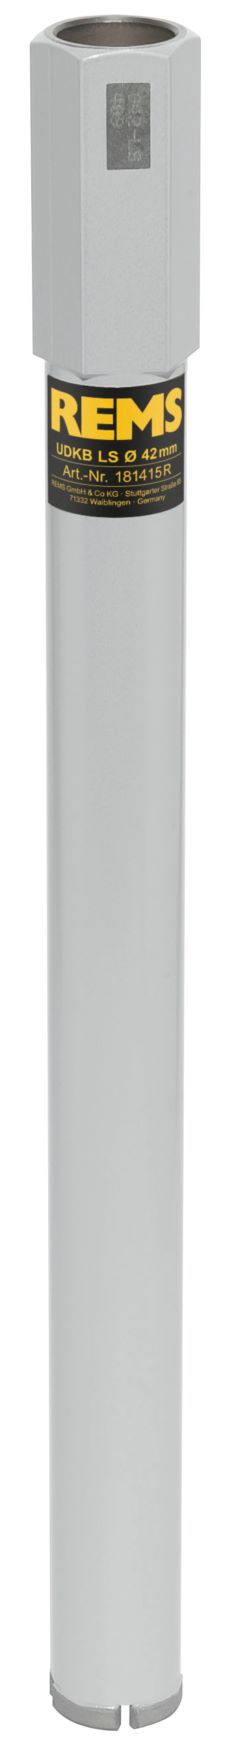 Rems UDKB LS,42 мм,1 1/4'' Боркорона с диамантени сегменти 181415